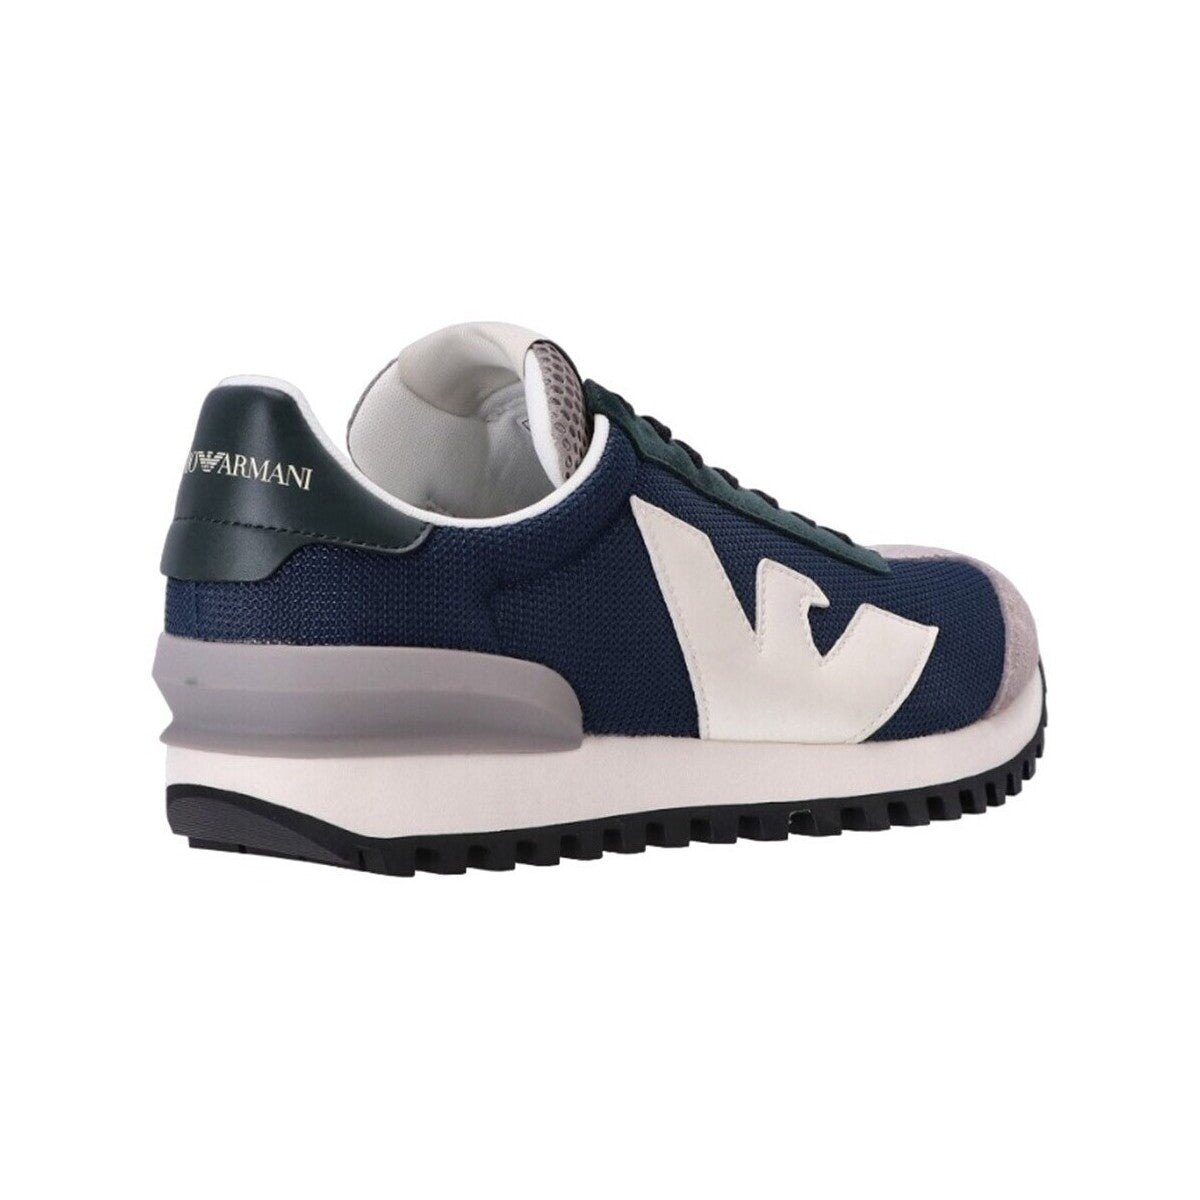 Sneakers Emporio Armani Blu e Grigio - mem39